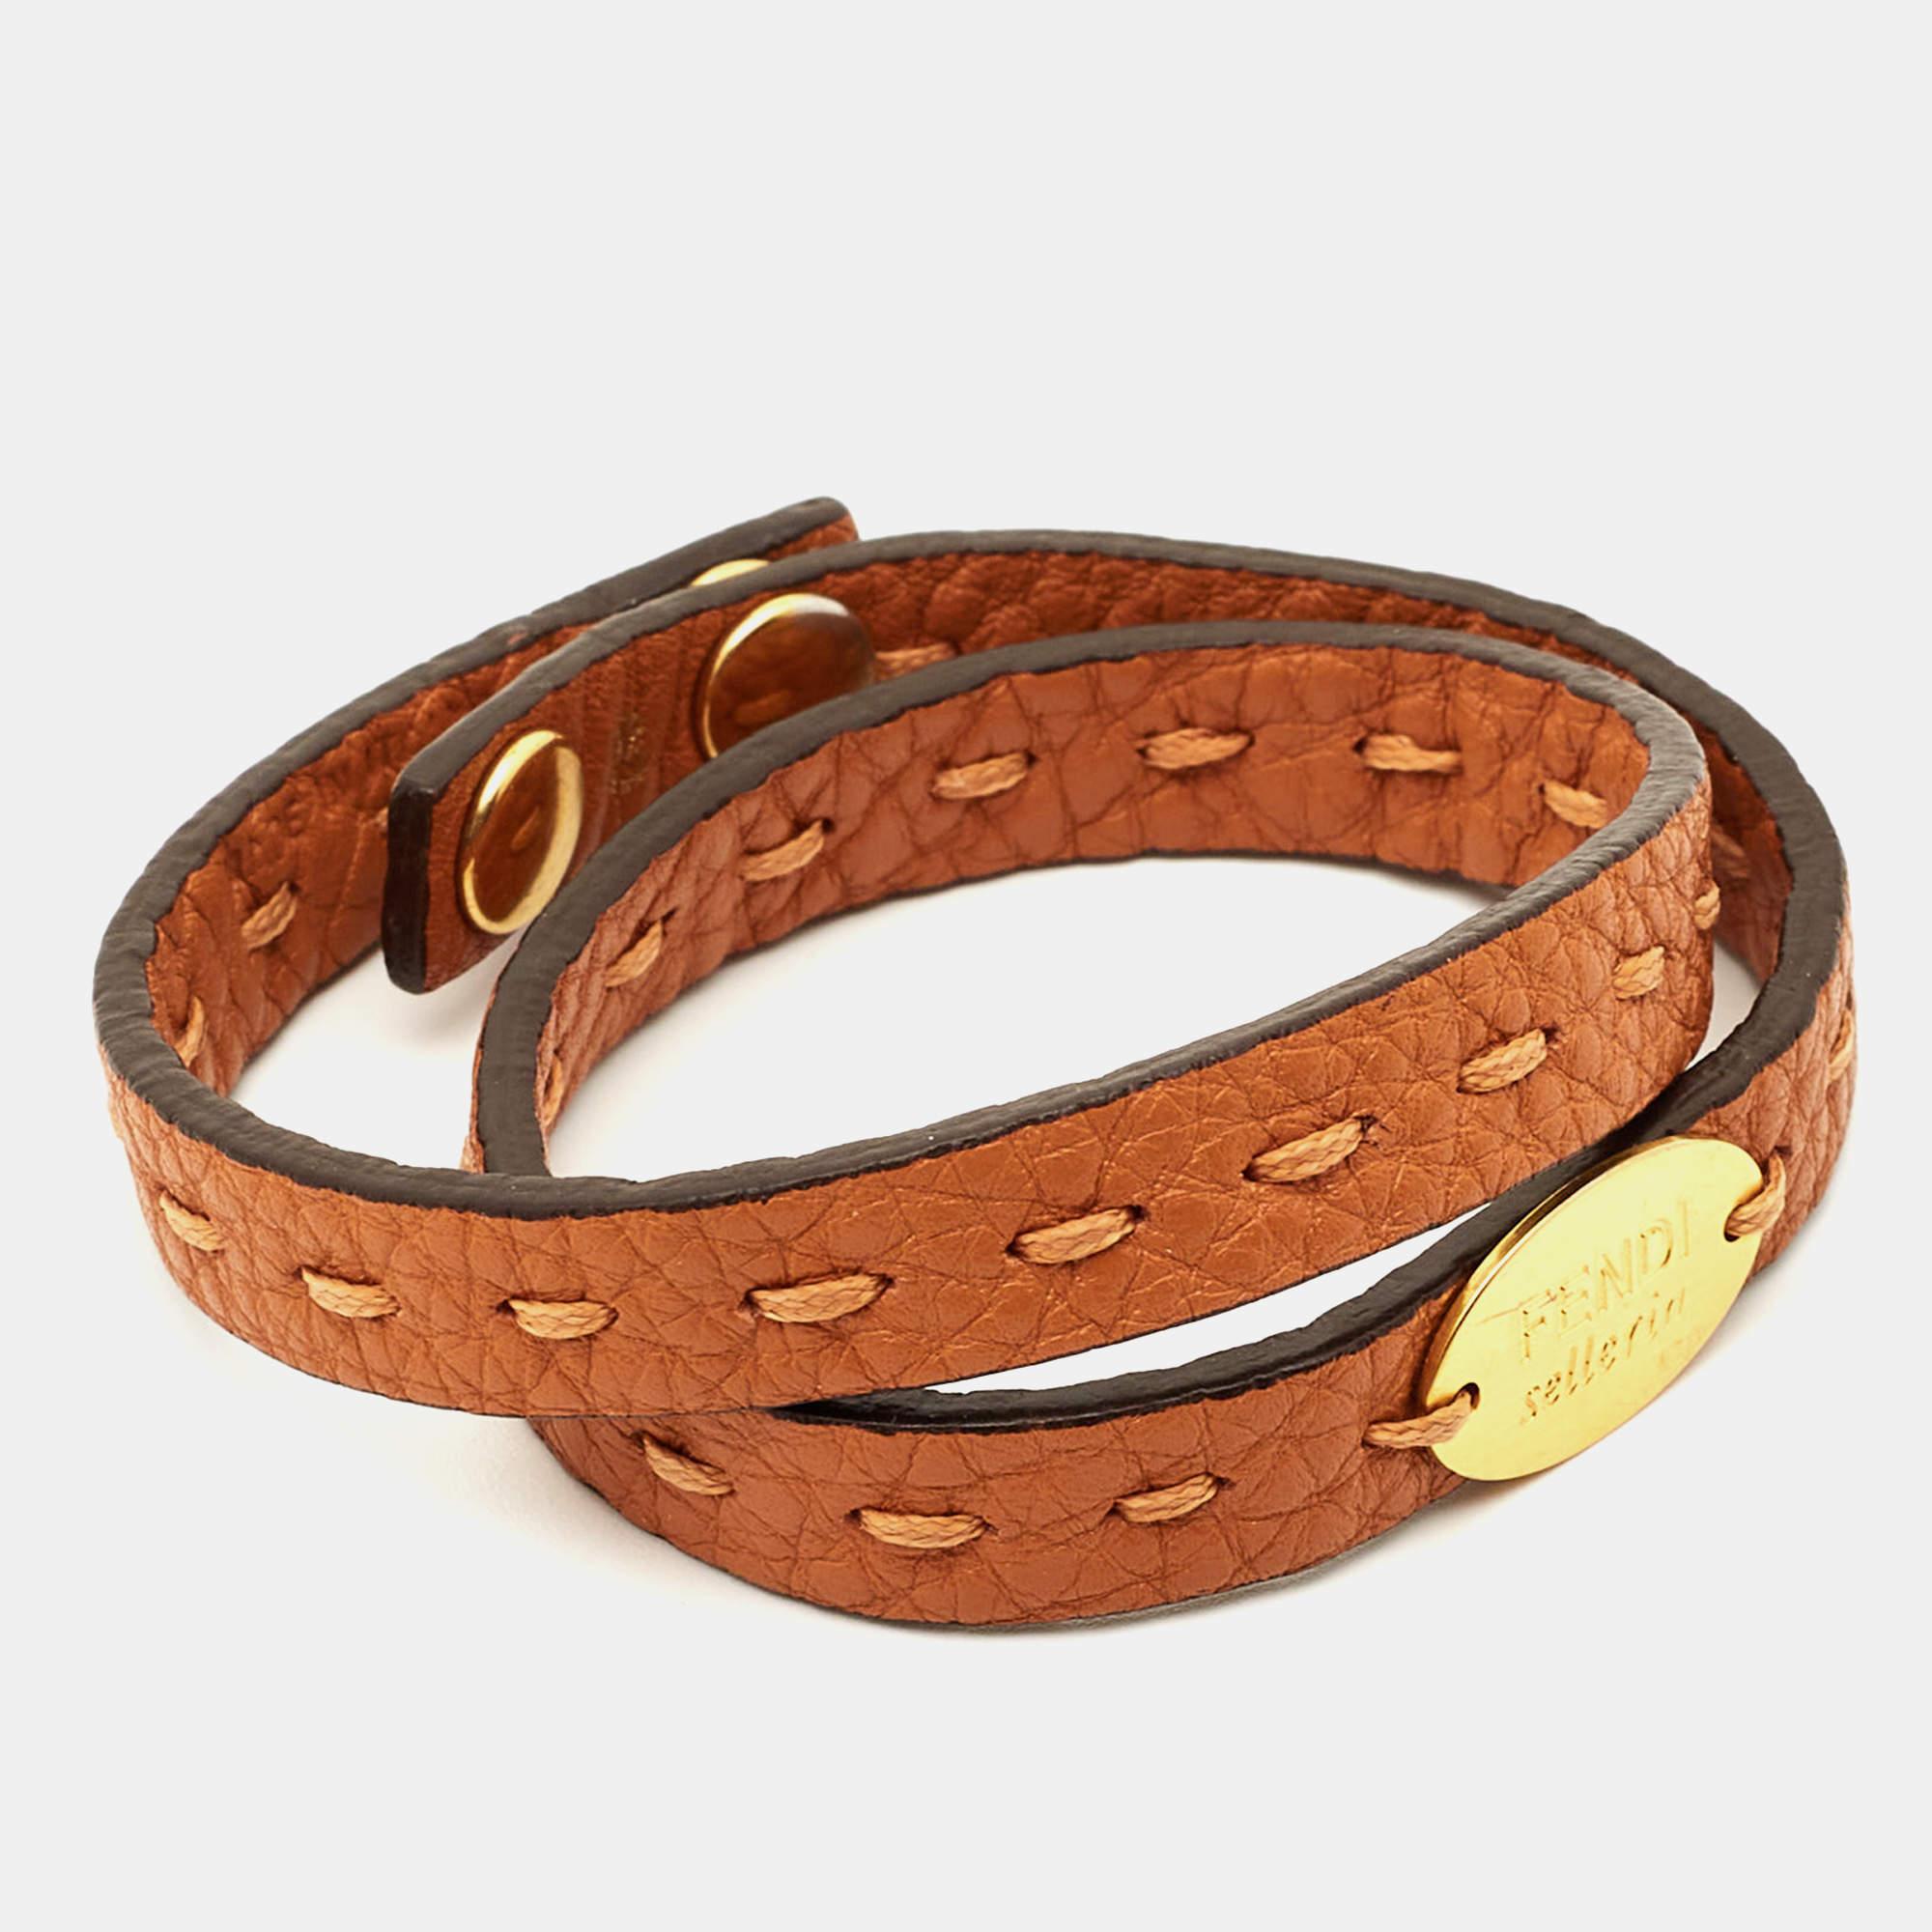 fendi leather bracelet